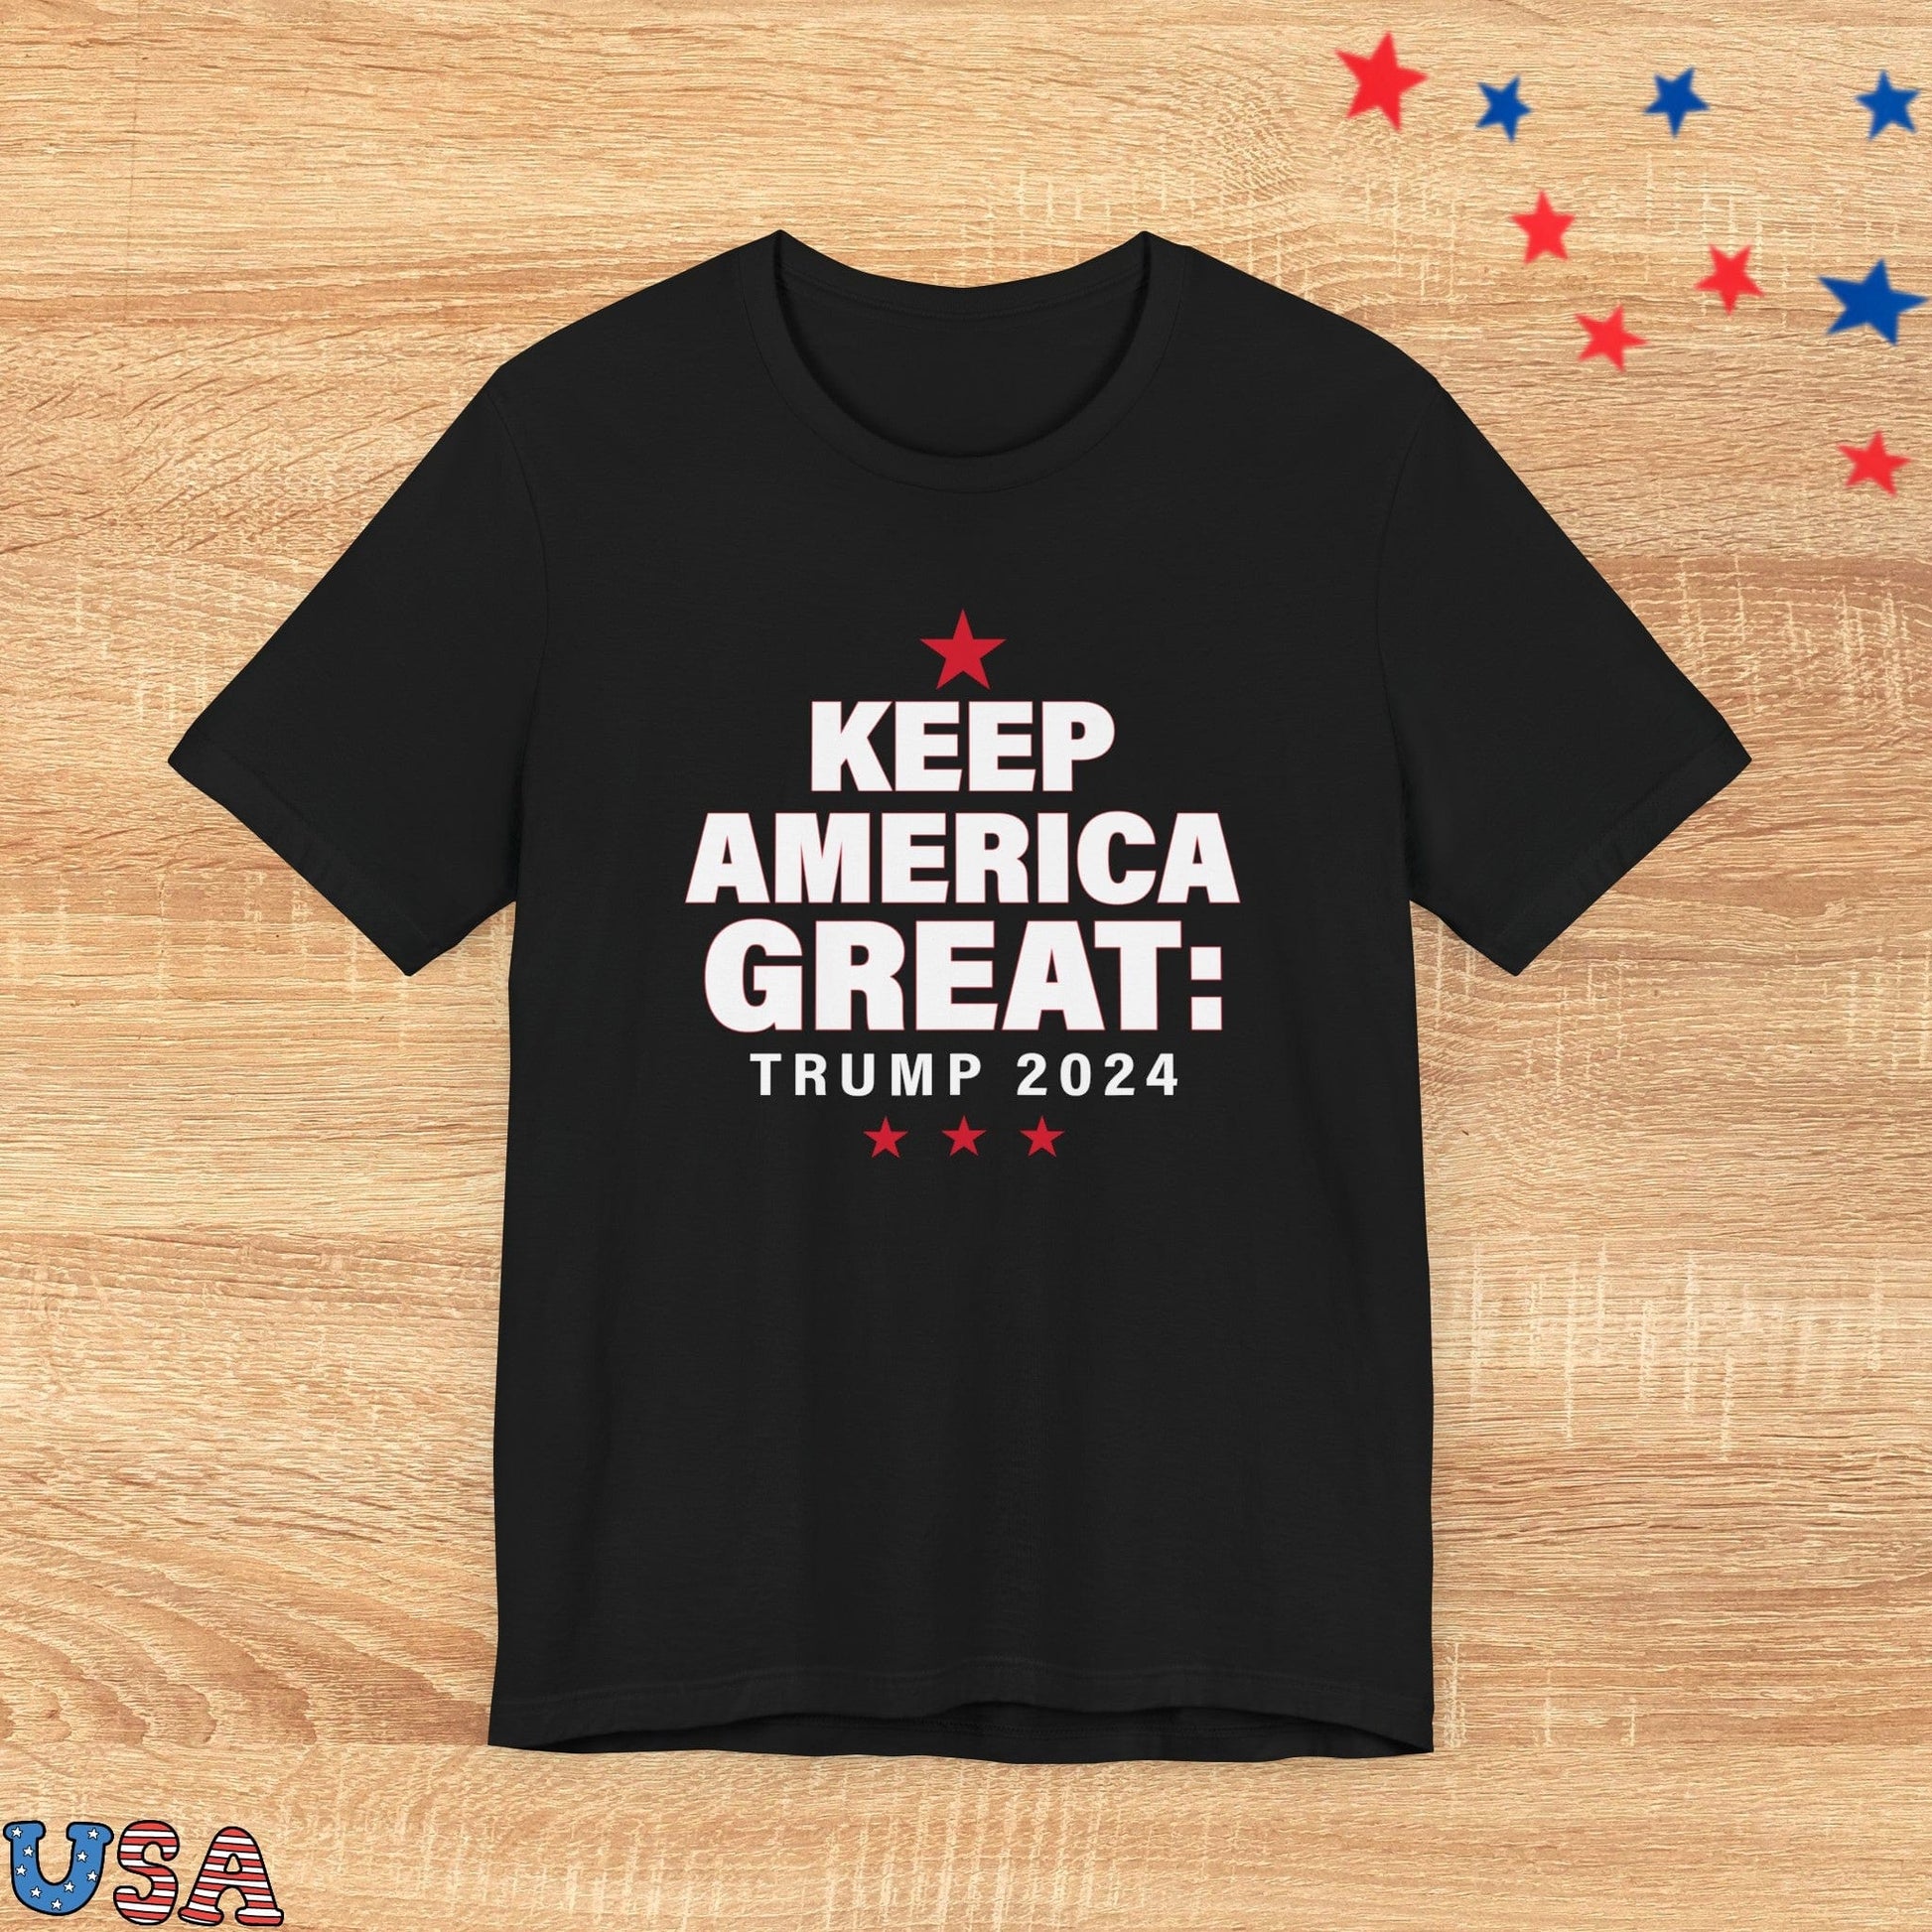 patriotic stars T-Shirt Black / XS Keep America Great